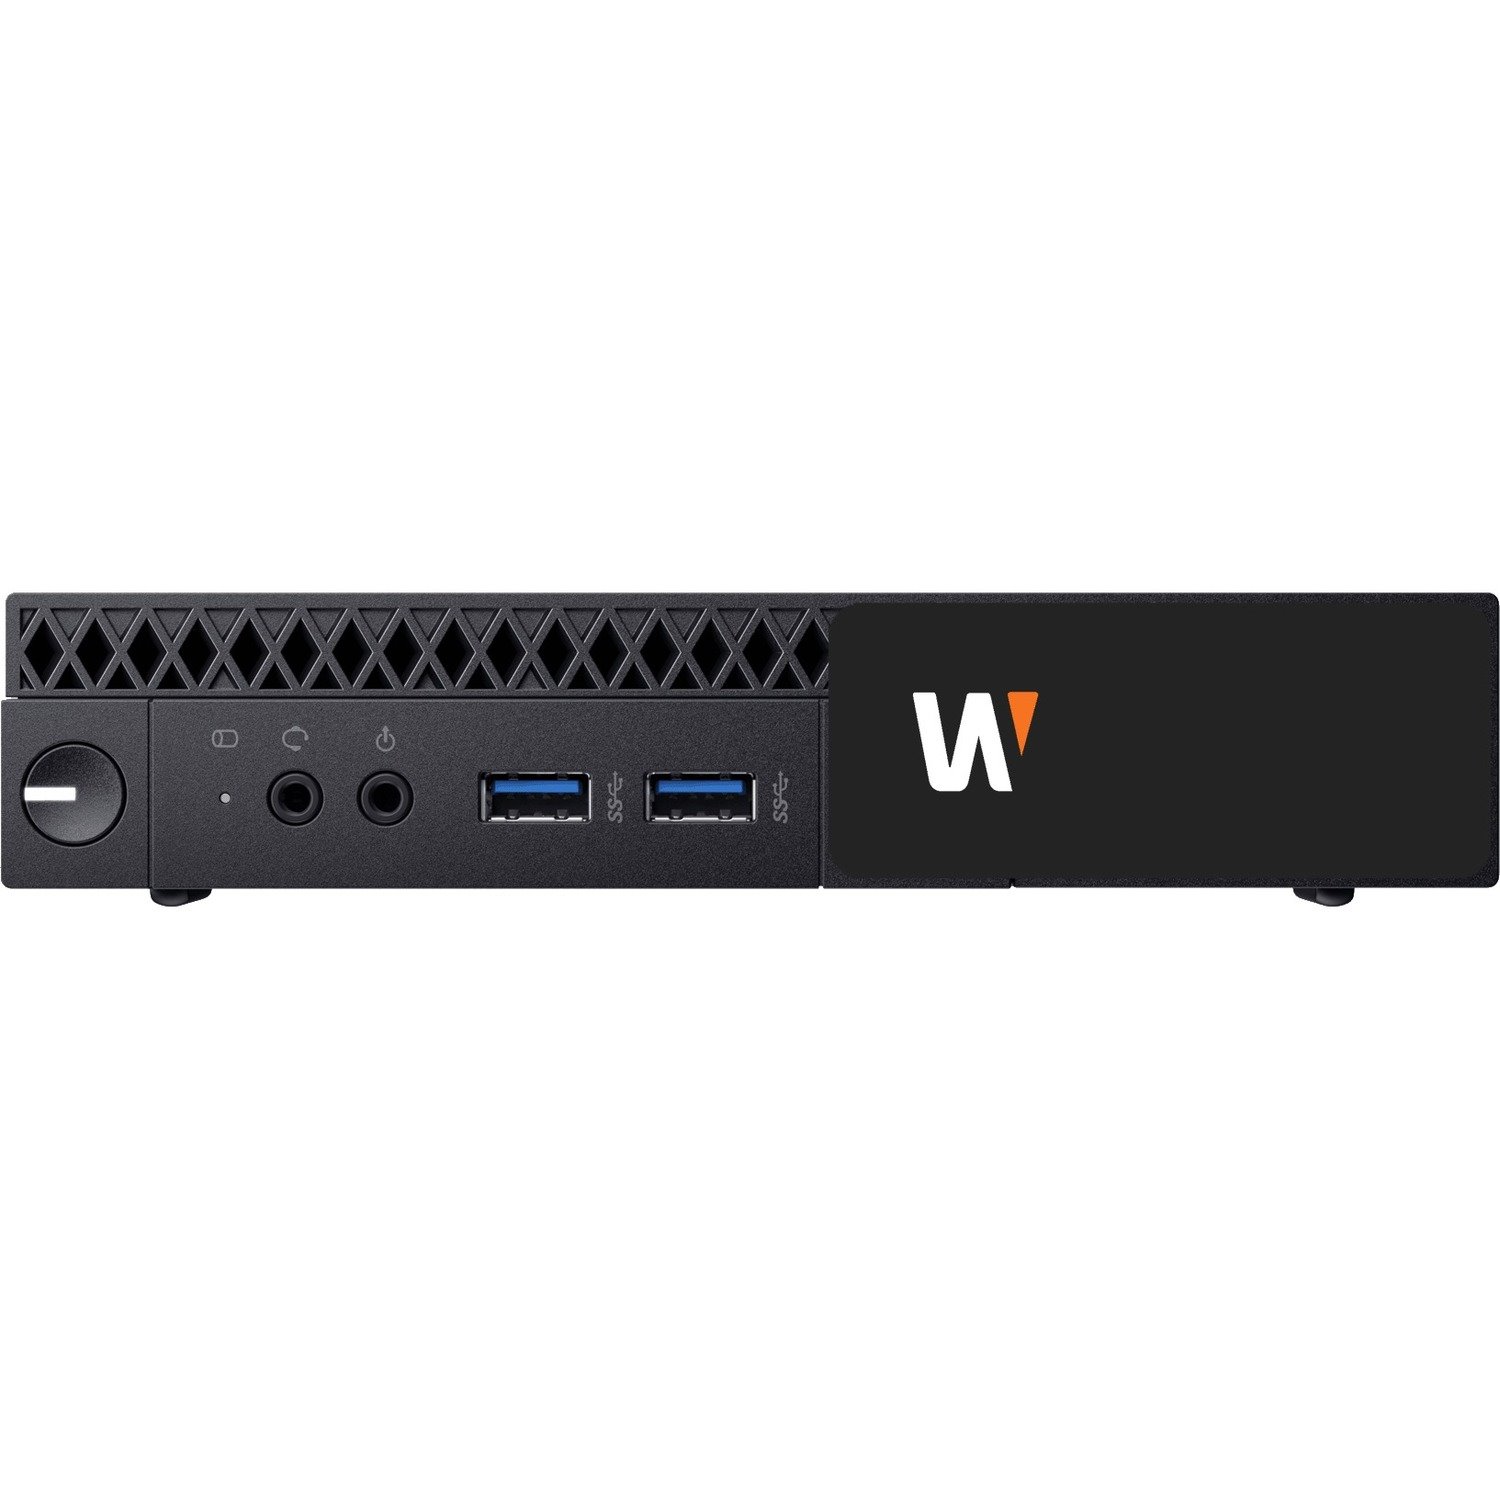 Wisenet WAVE Recording Server - 1 TB HDD